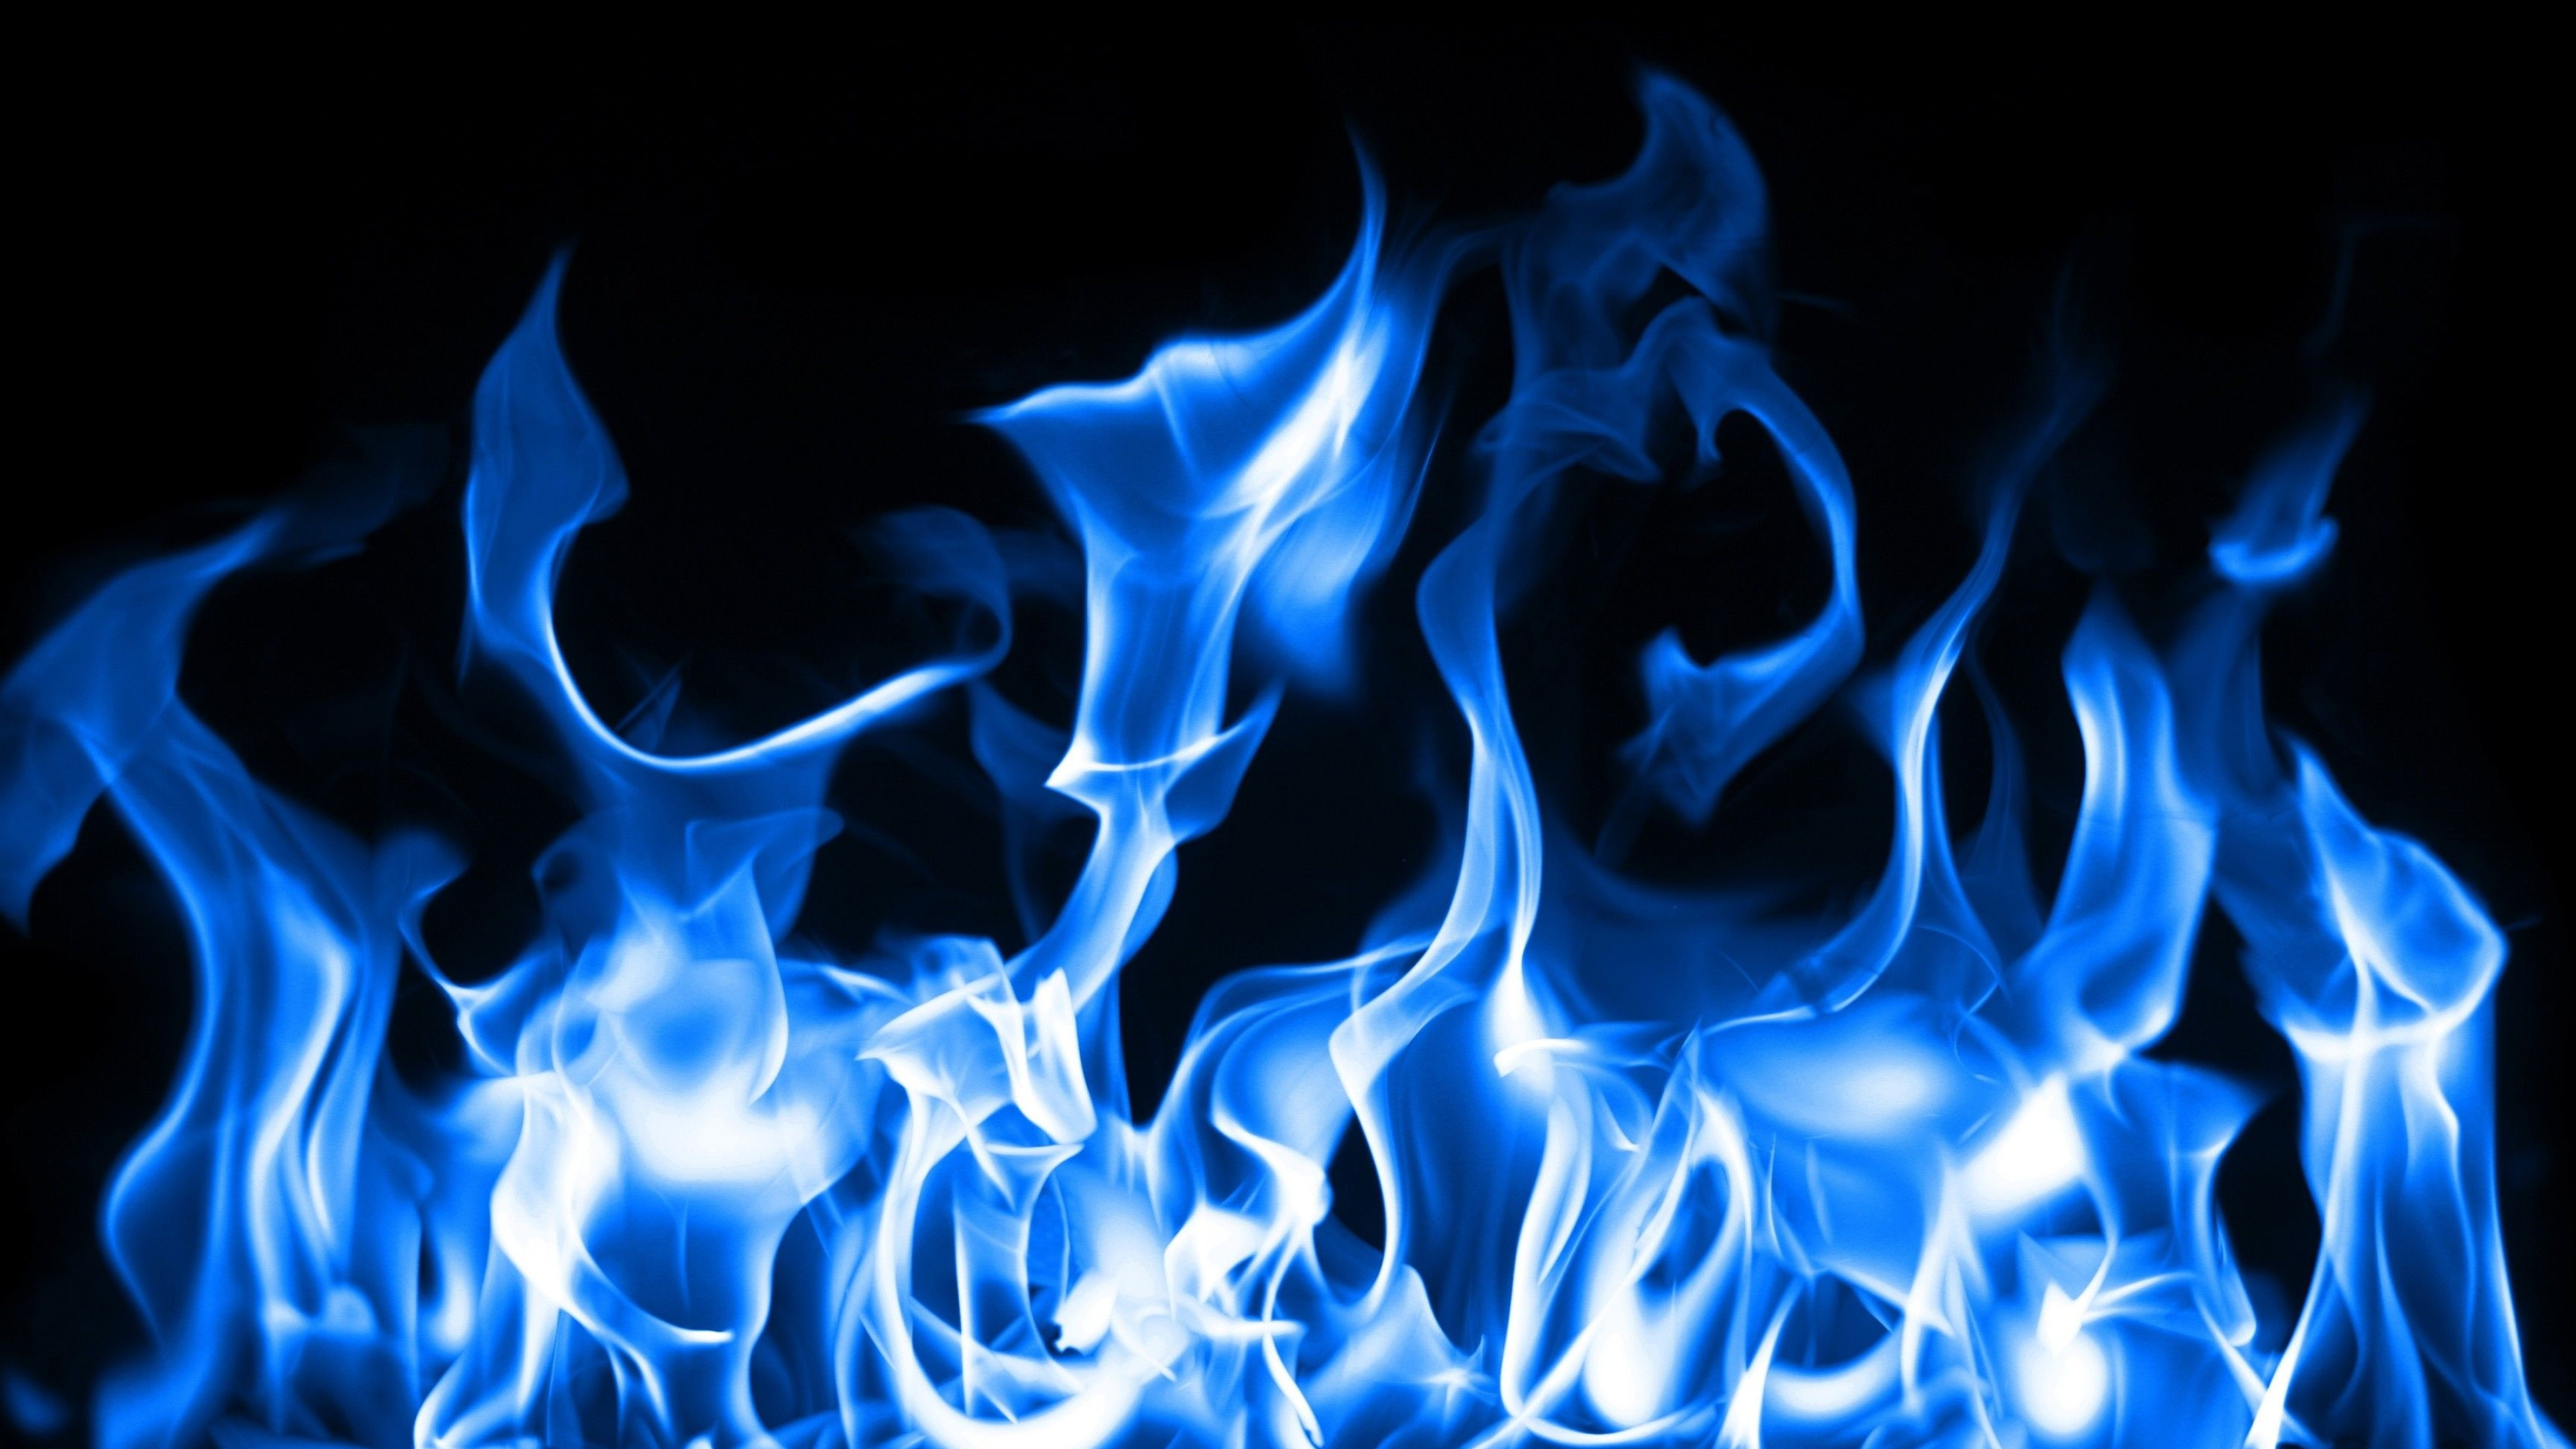 Blue fire wallpapers, Striking blue flames, High-definition blue fire visuals, Premium blue fire images, Flame wallpaper backgrounds, 3840x2160 4K Desktop